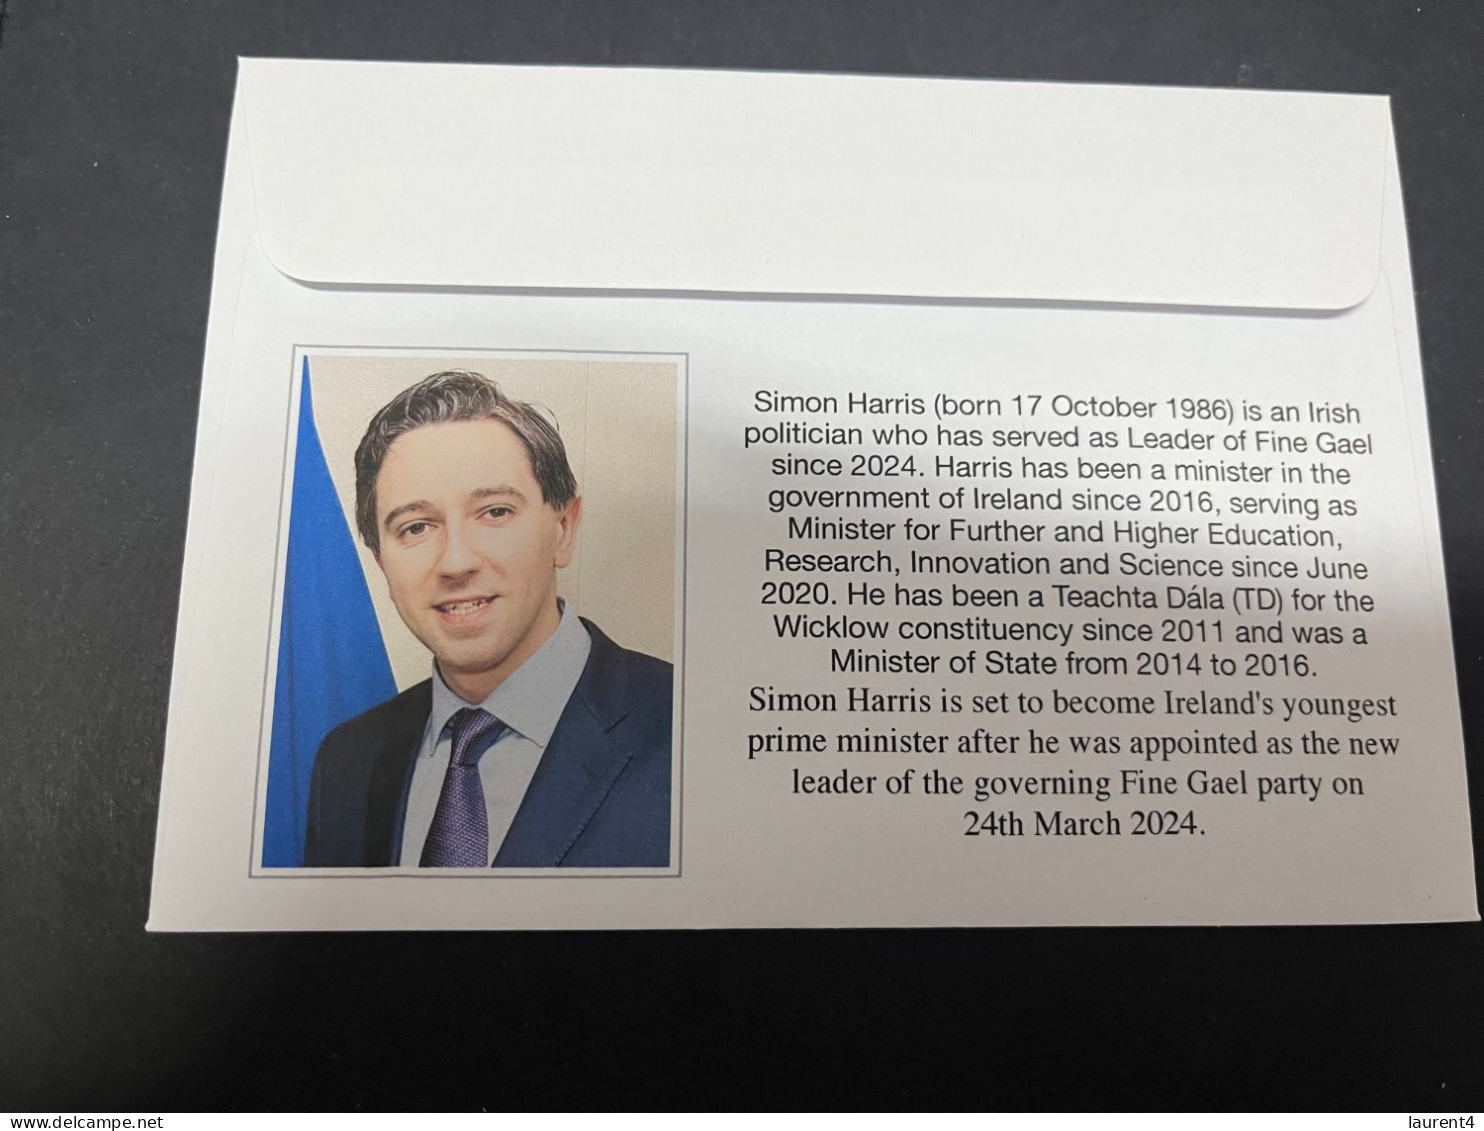 27-3-2024 (4 Y 12) Ireland New Prime Minister - Simon Harris (24-3-2024) - Lettres & Documents